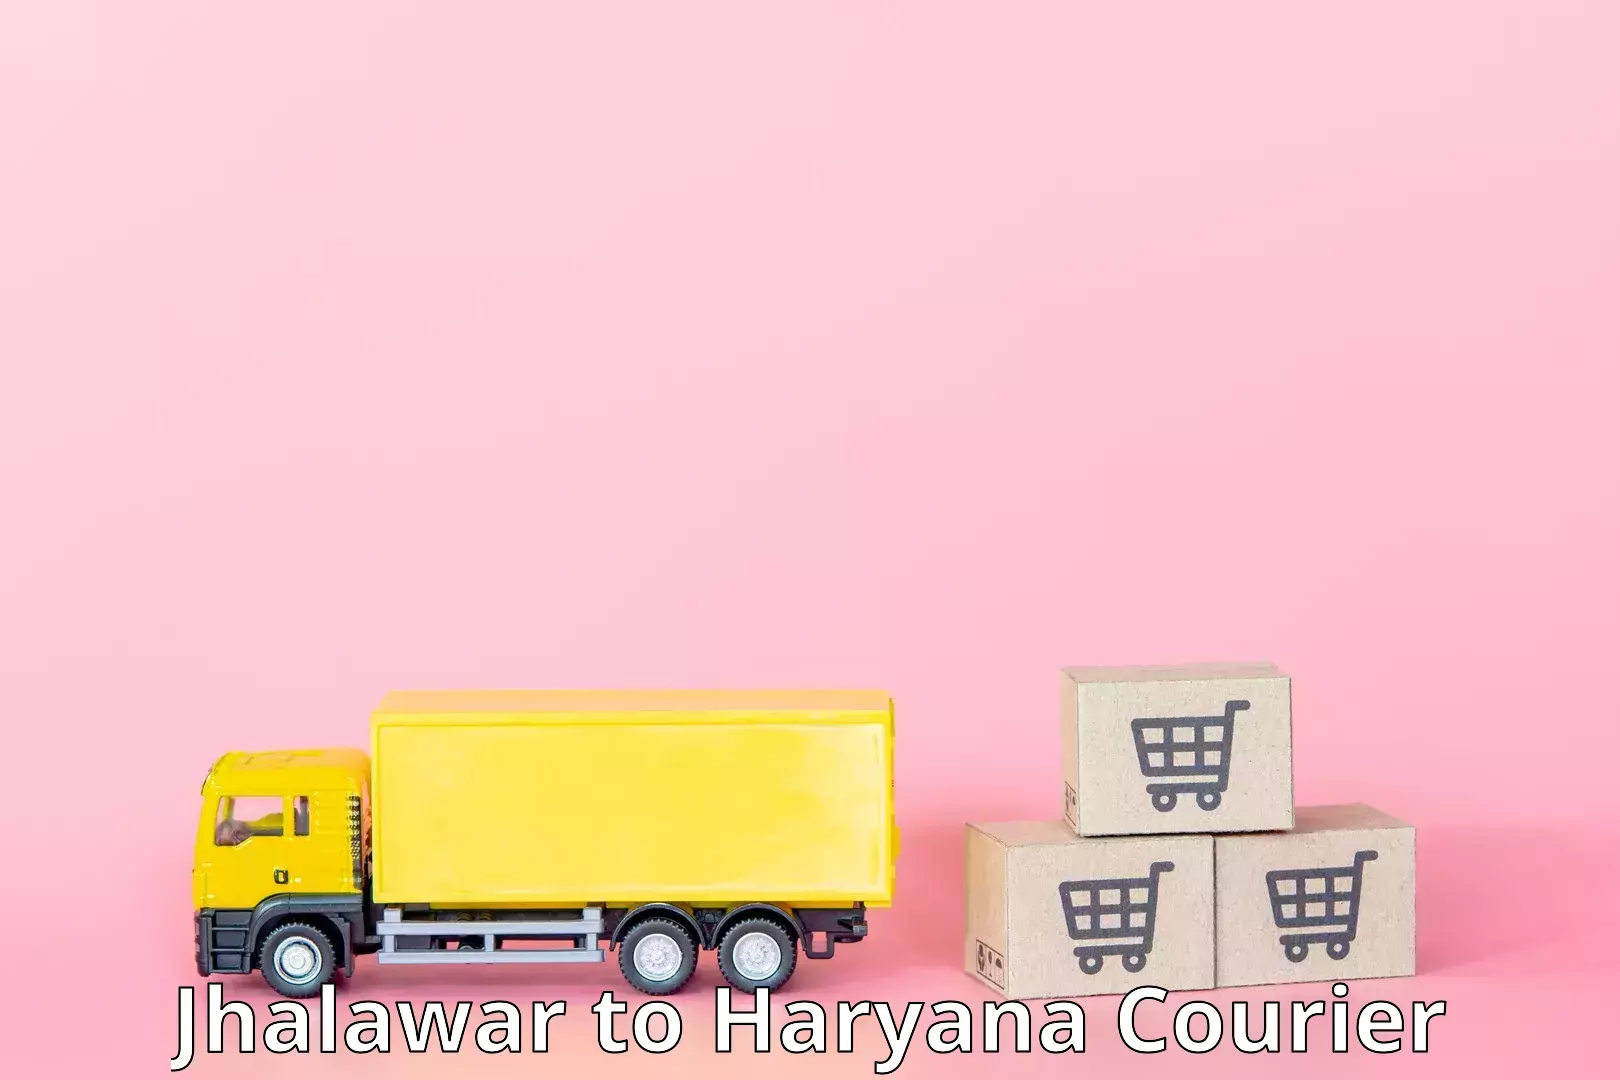 Courier service comparison Jhalawar to Hansi